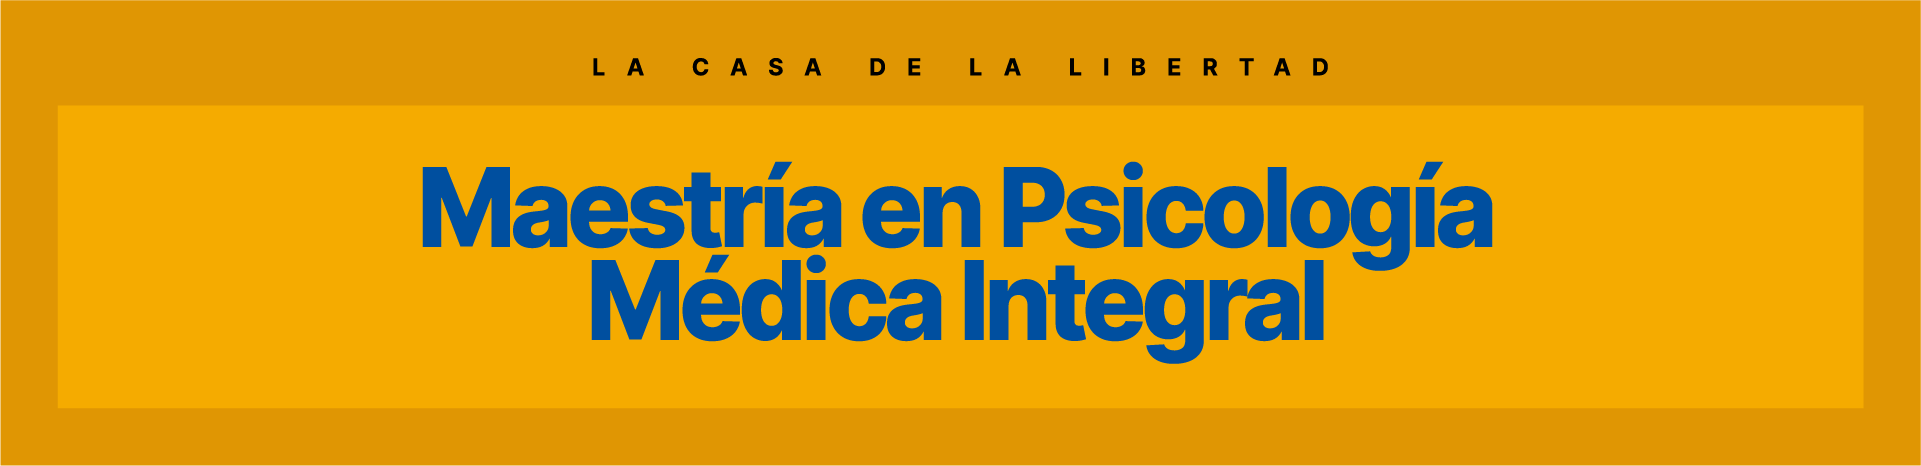 MAESTRIA PSICOLOGIA MEDICA INTEGRAL UFM, en línea, Maestría en Psicología Médica Integral Universidad Francisco Marroquín Guatemala